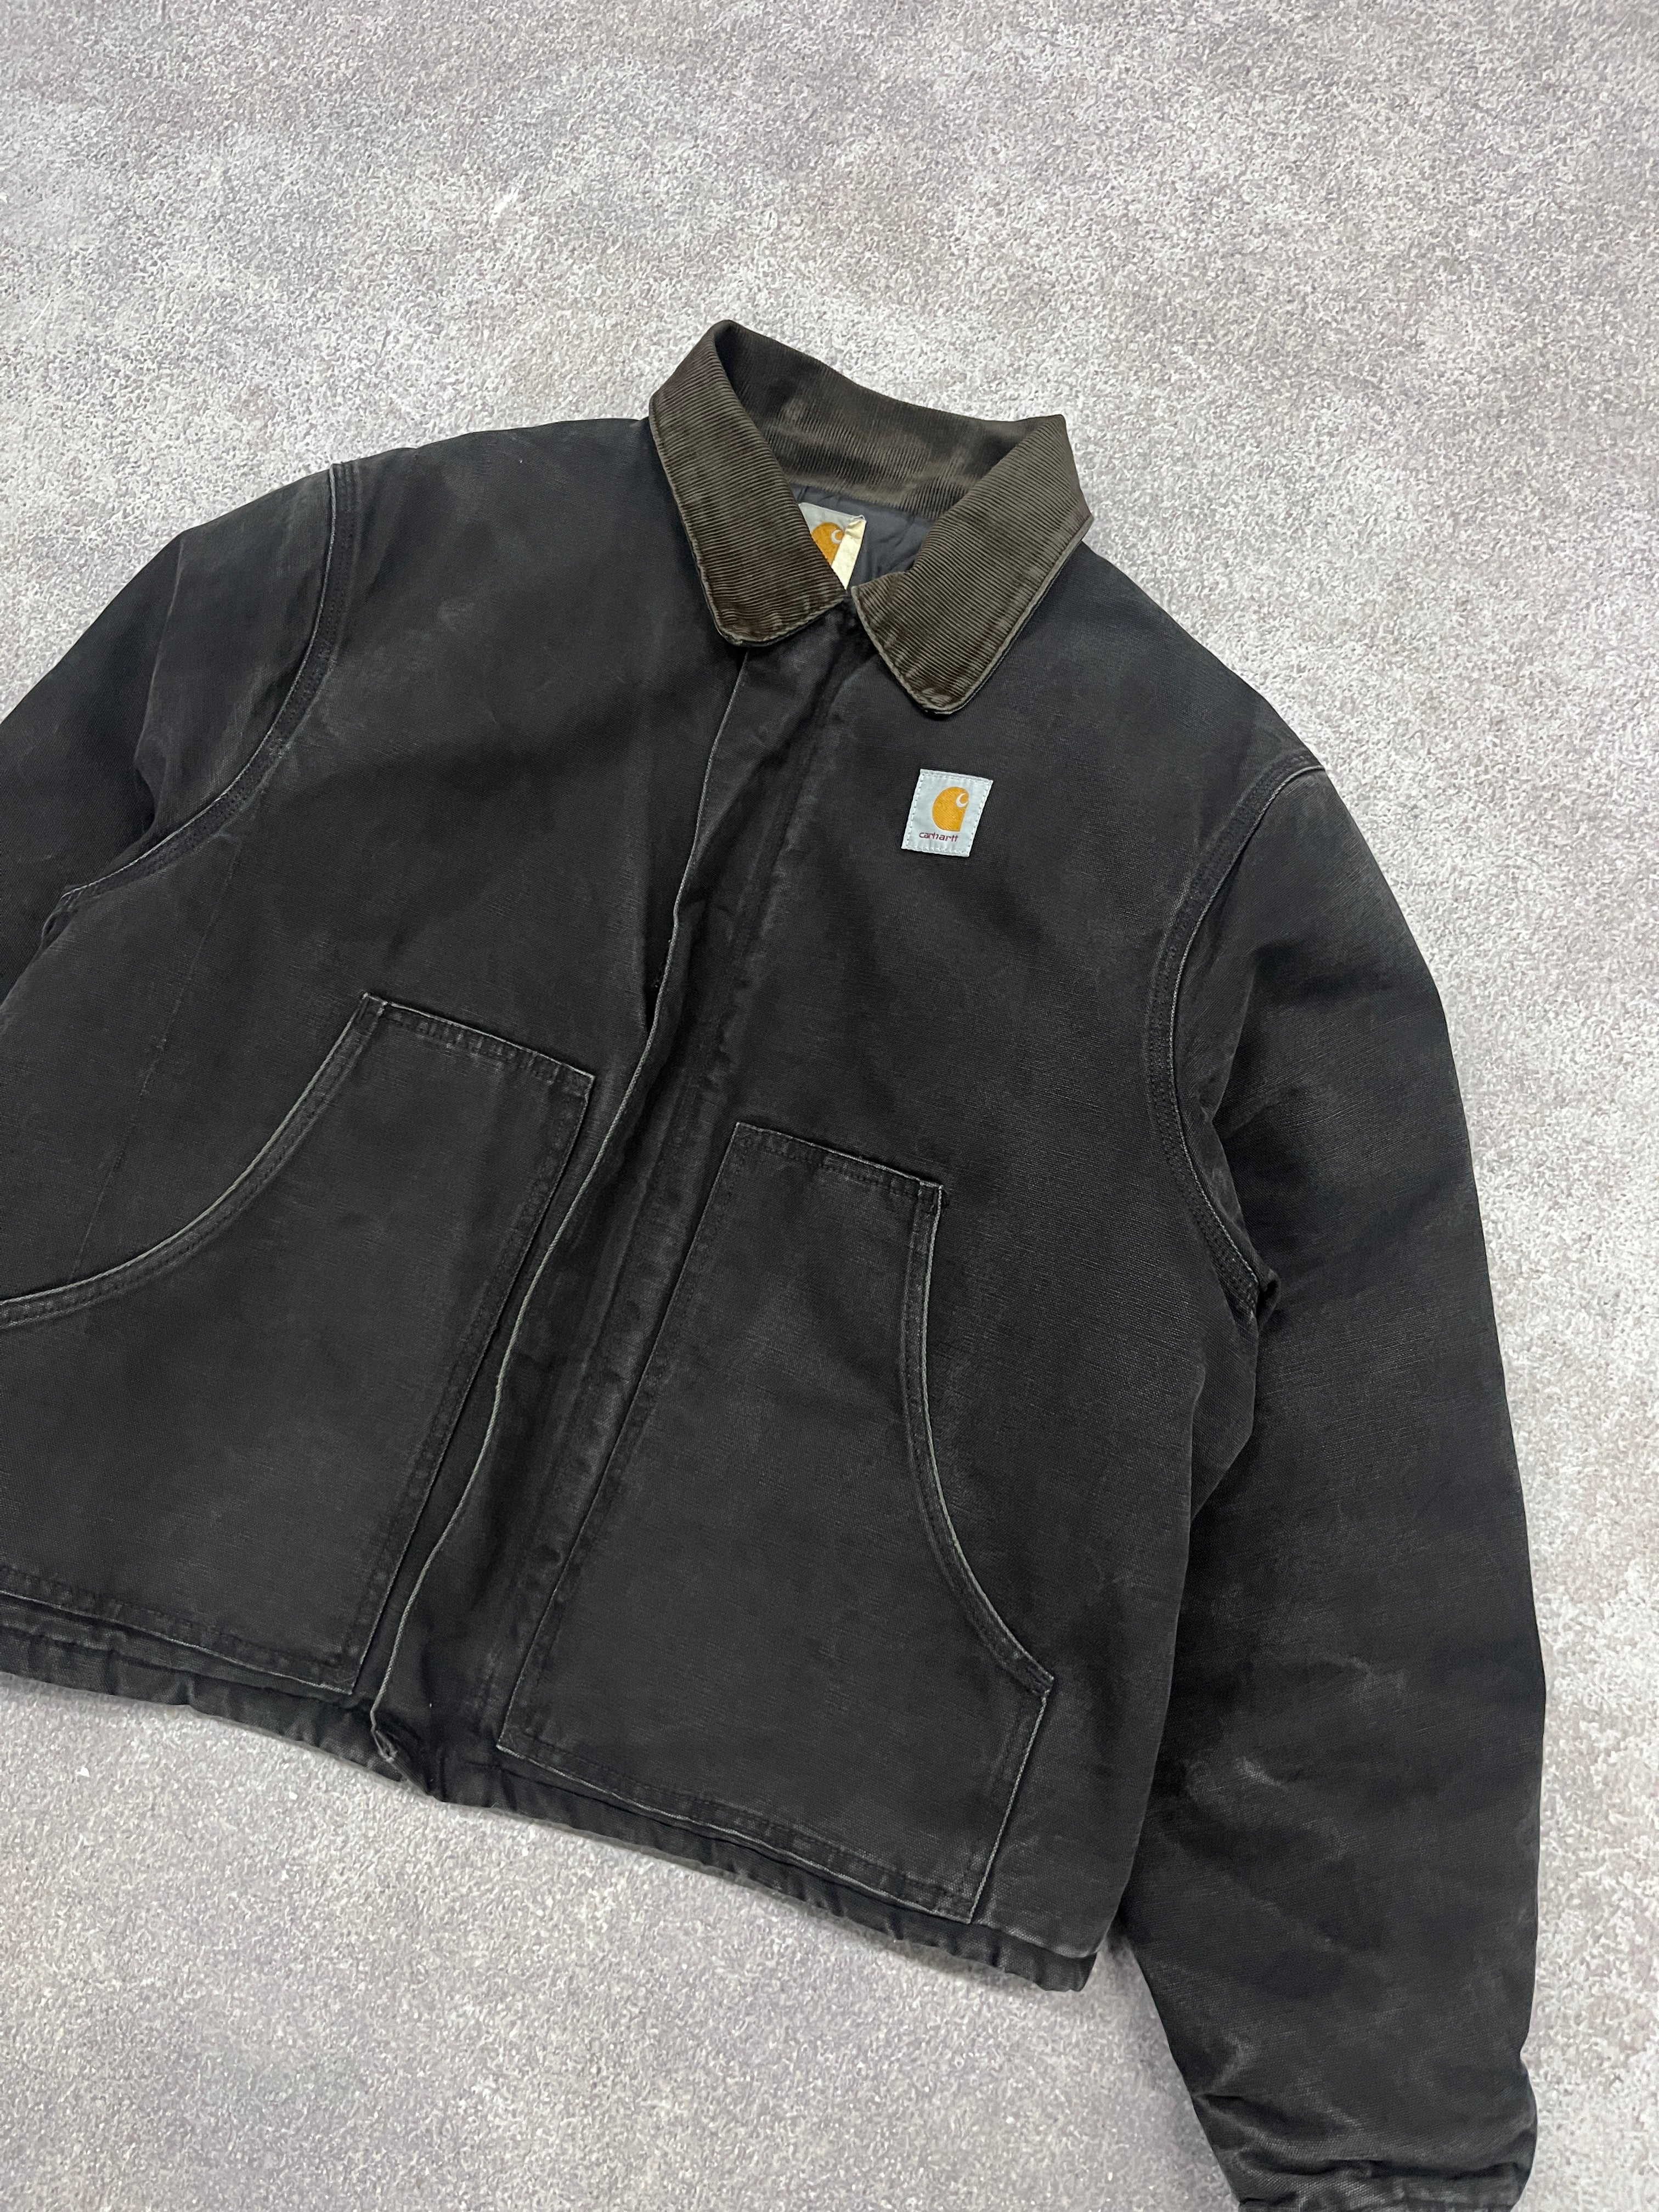 Vintage Carhartt Workwear Jacket Grey // Large (Boxy) - RHAGHOUSE VINTAGE